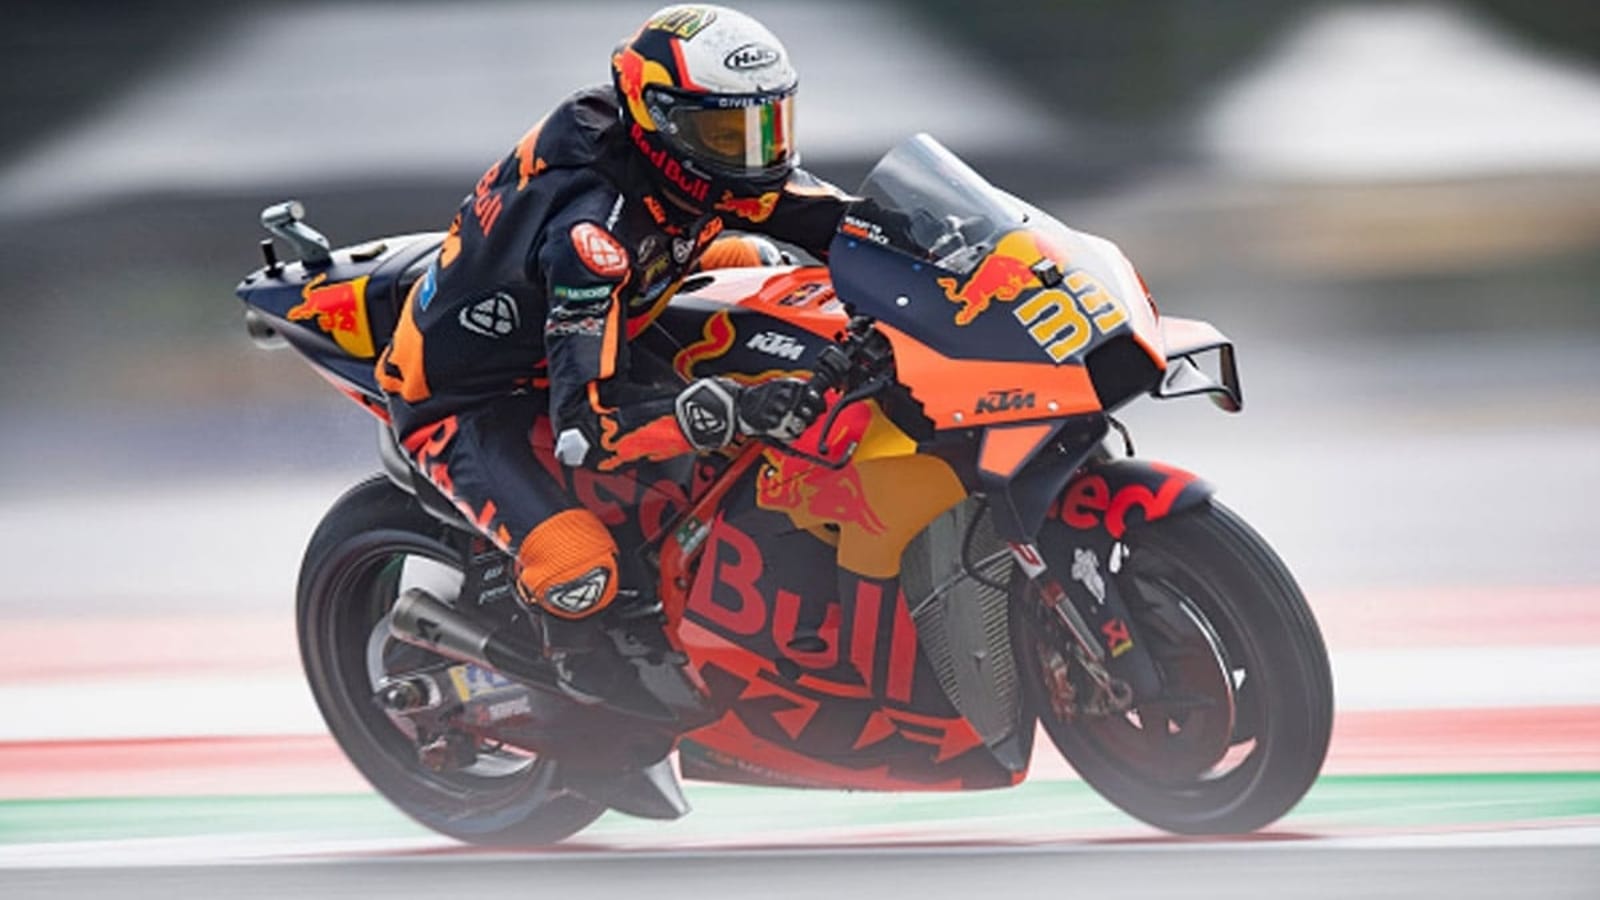 MotoGP all set to make India debut Hindustan Times